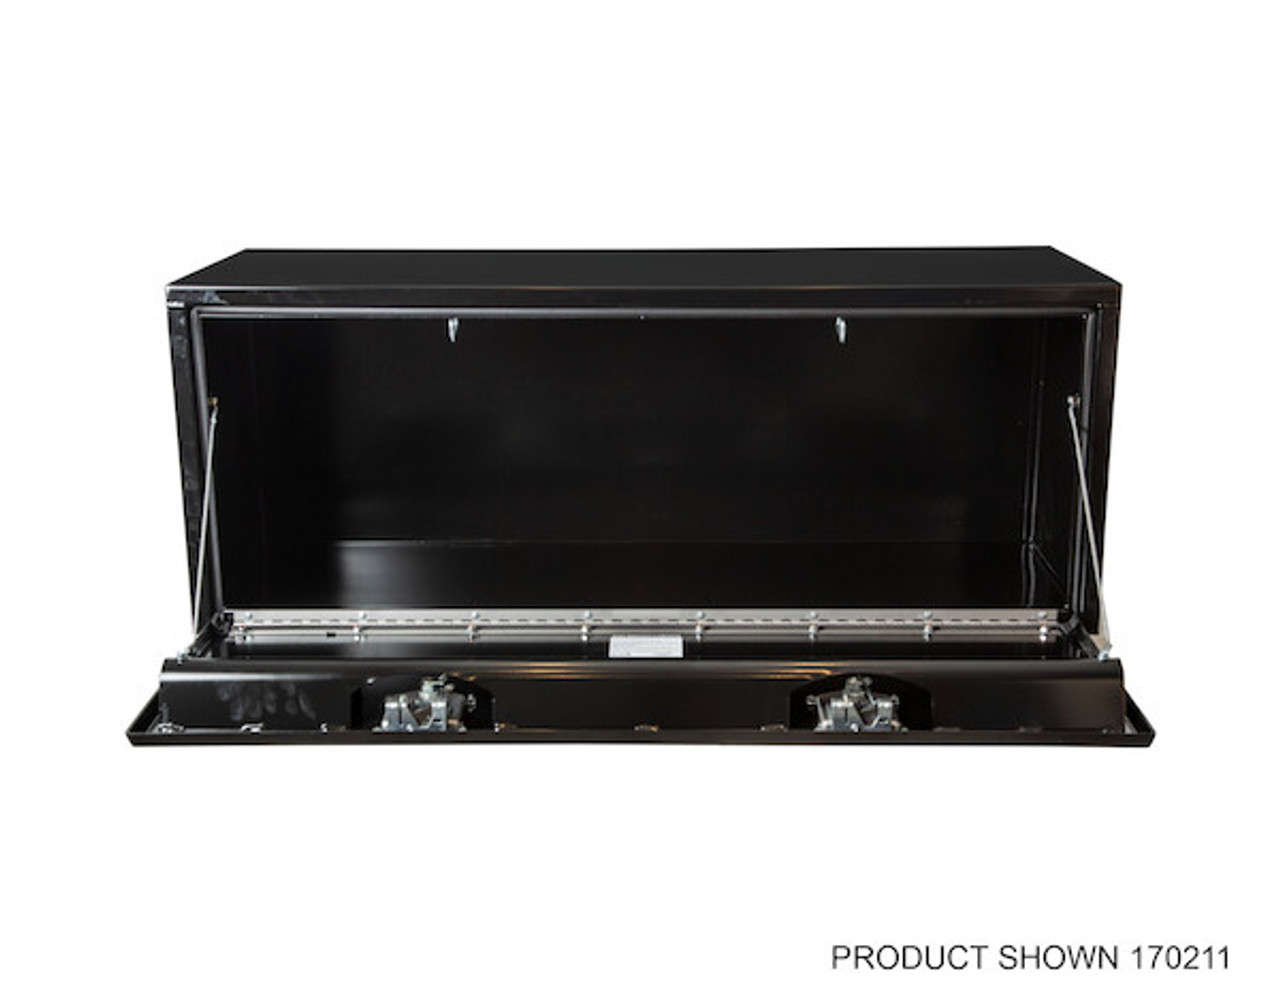 1703100 - 14x16x24 Inch Black Steel Underbody Truck Box With Paddle Latch